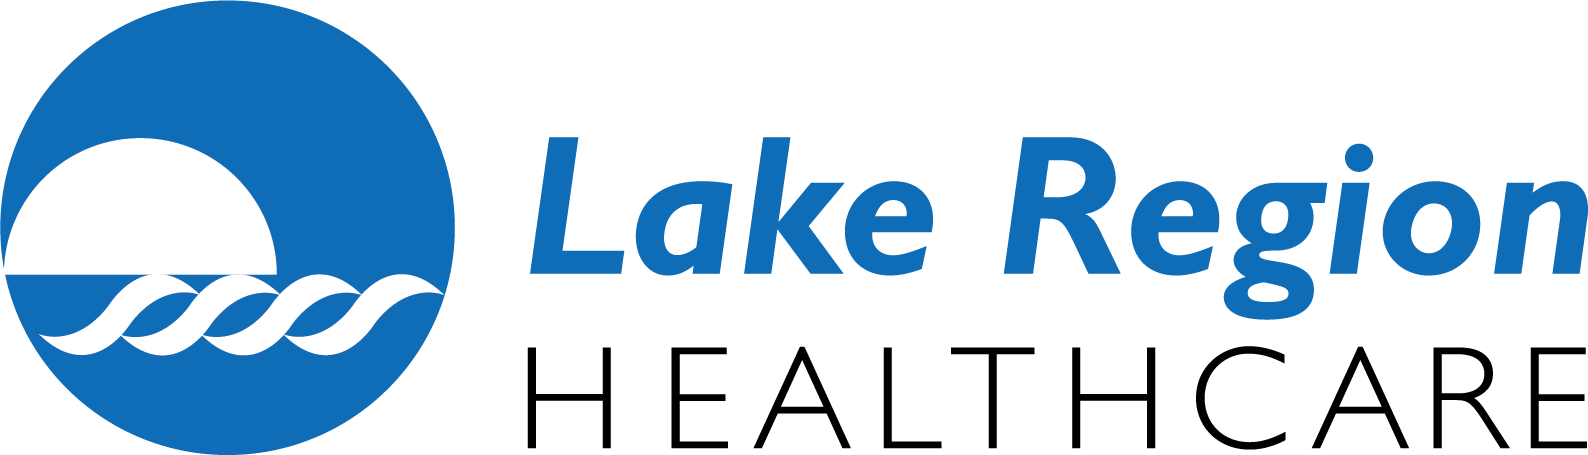 Lake Region Healthcare Foundation